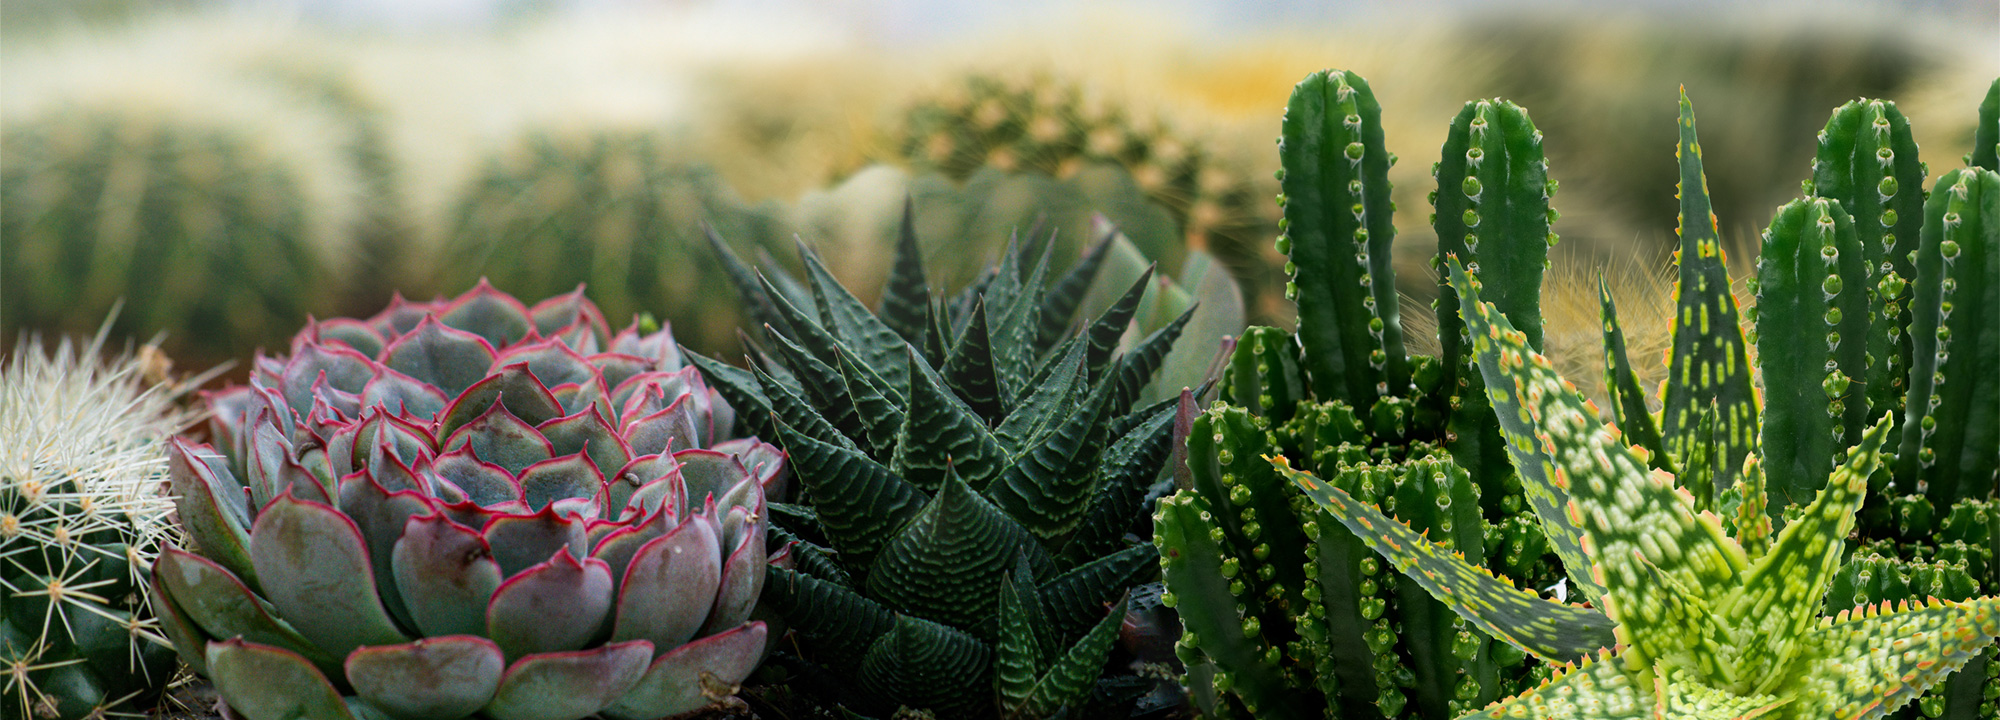 cacti-kaktus-cactus-plainview-pure-premium-orchids-succulents